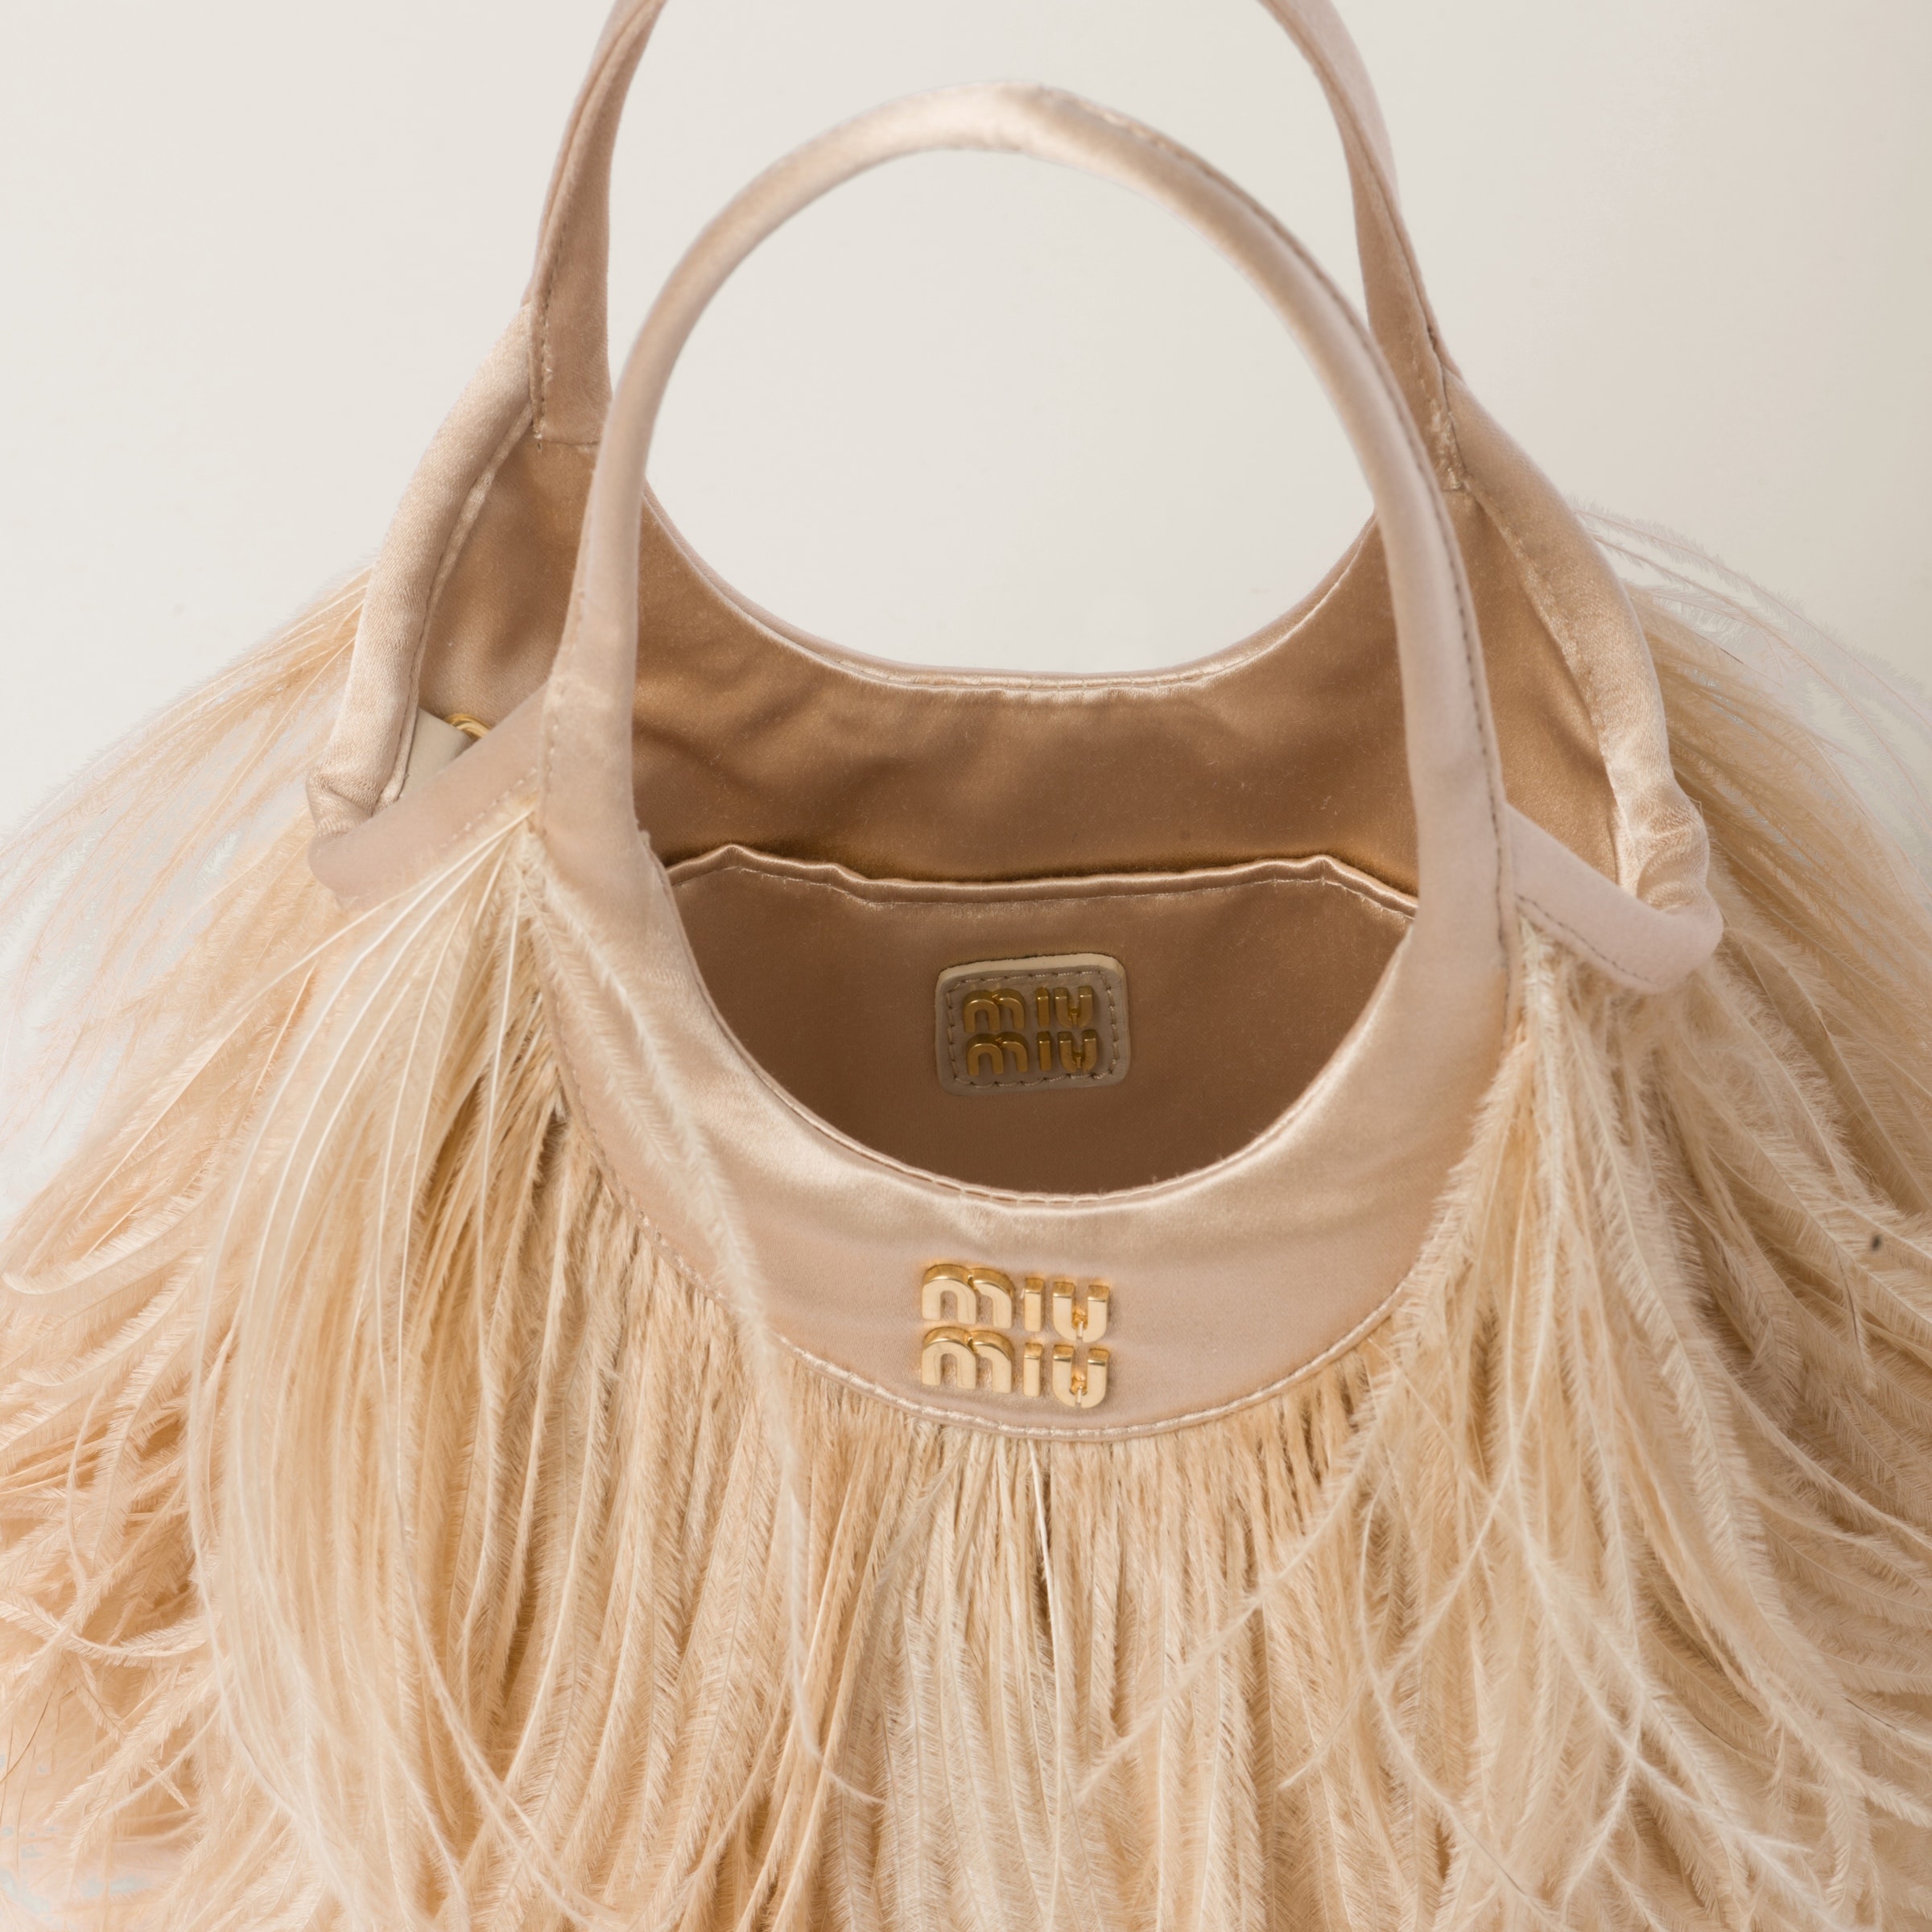 Satin handbag with feathers - 5